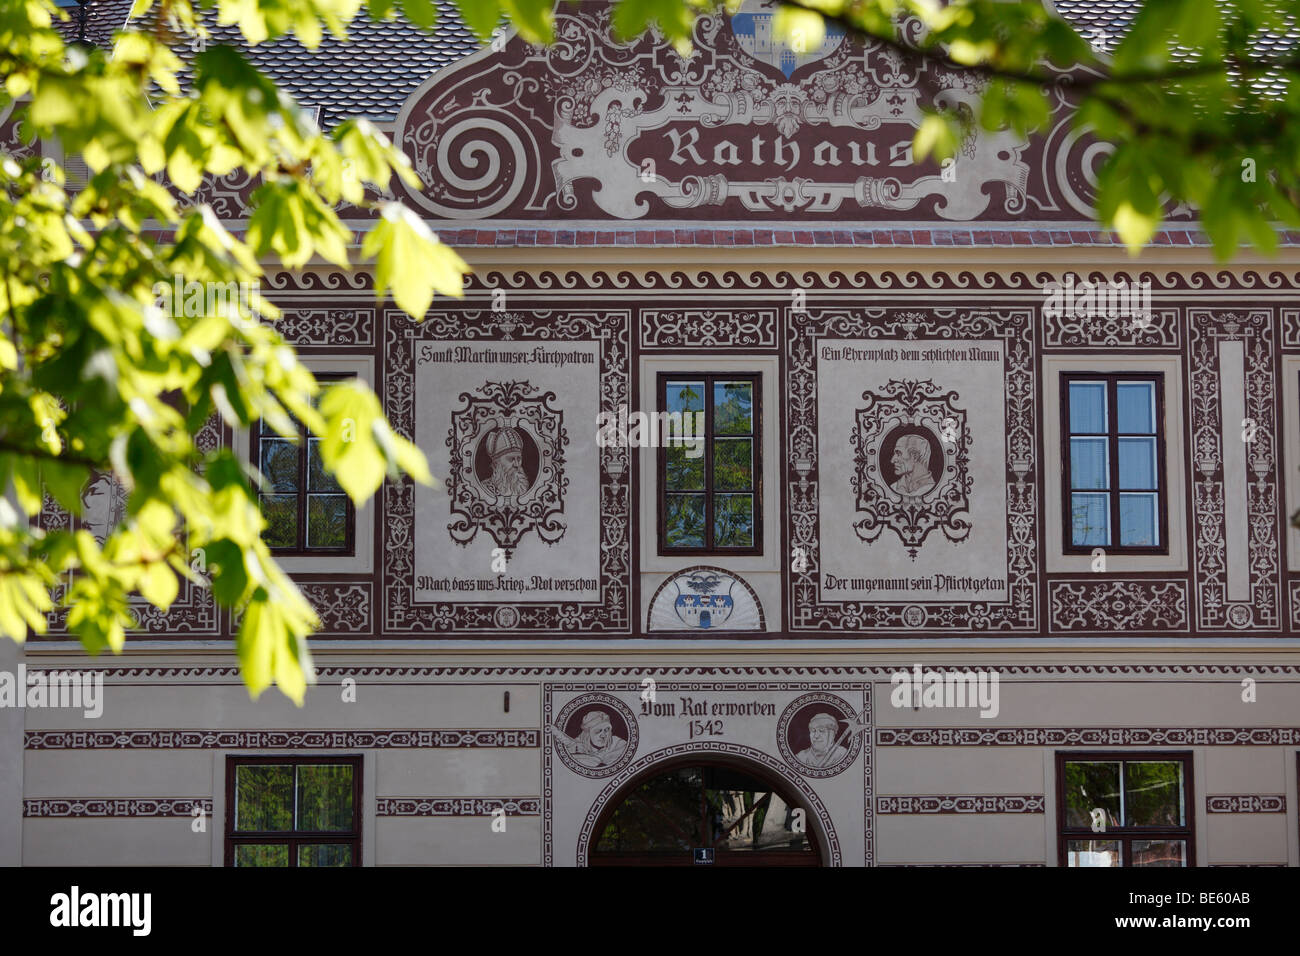 Town Hall with Sgraffito facade in the town of Drosendorf, Waldviertel, Lower Austria, Austria, Europe Stock Photo